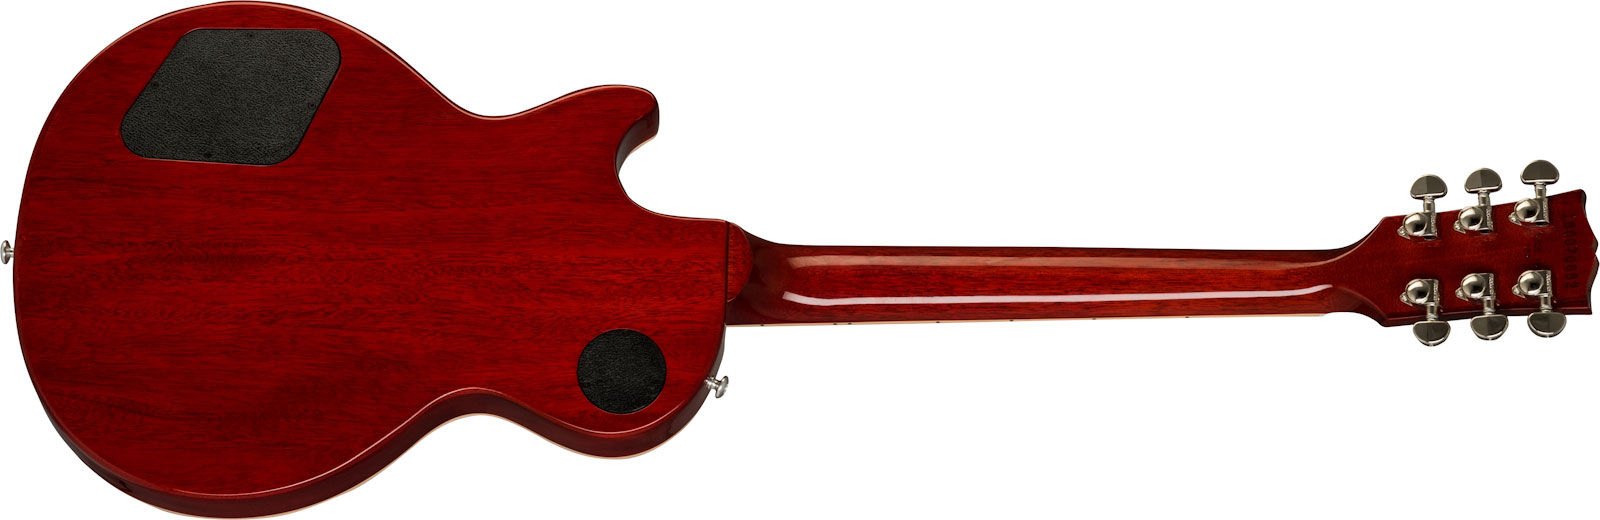 Gibson Les Paul Classic Modern 2019 2h Ht Rw - Heritage Cherry Sunburst - Single cut electric guitar - Variation 1